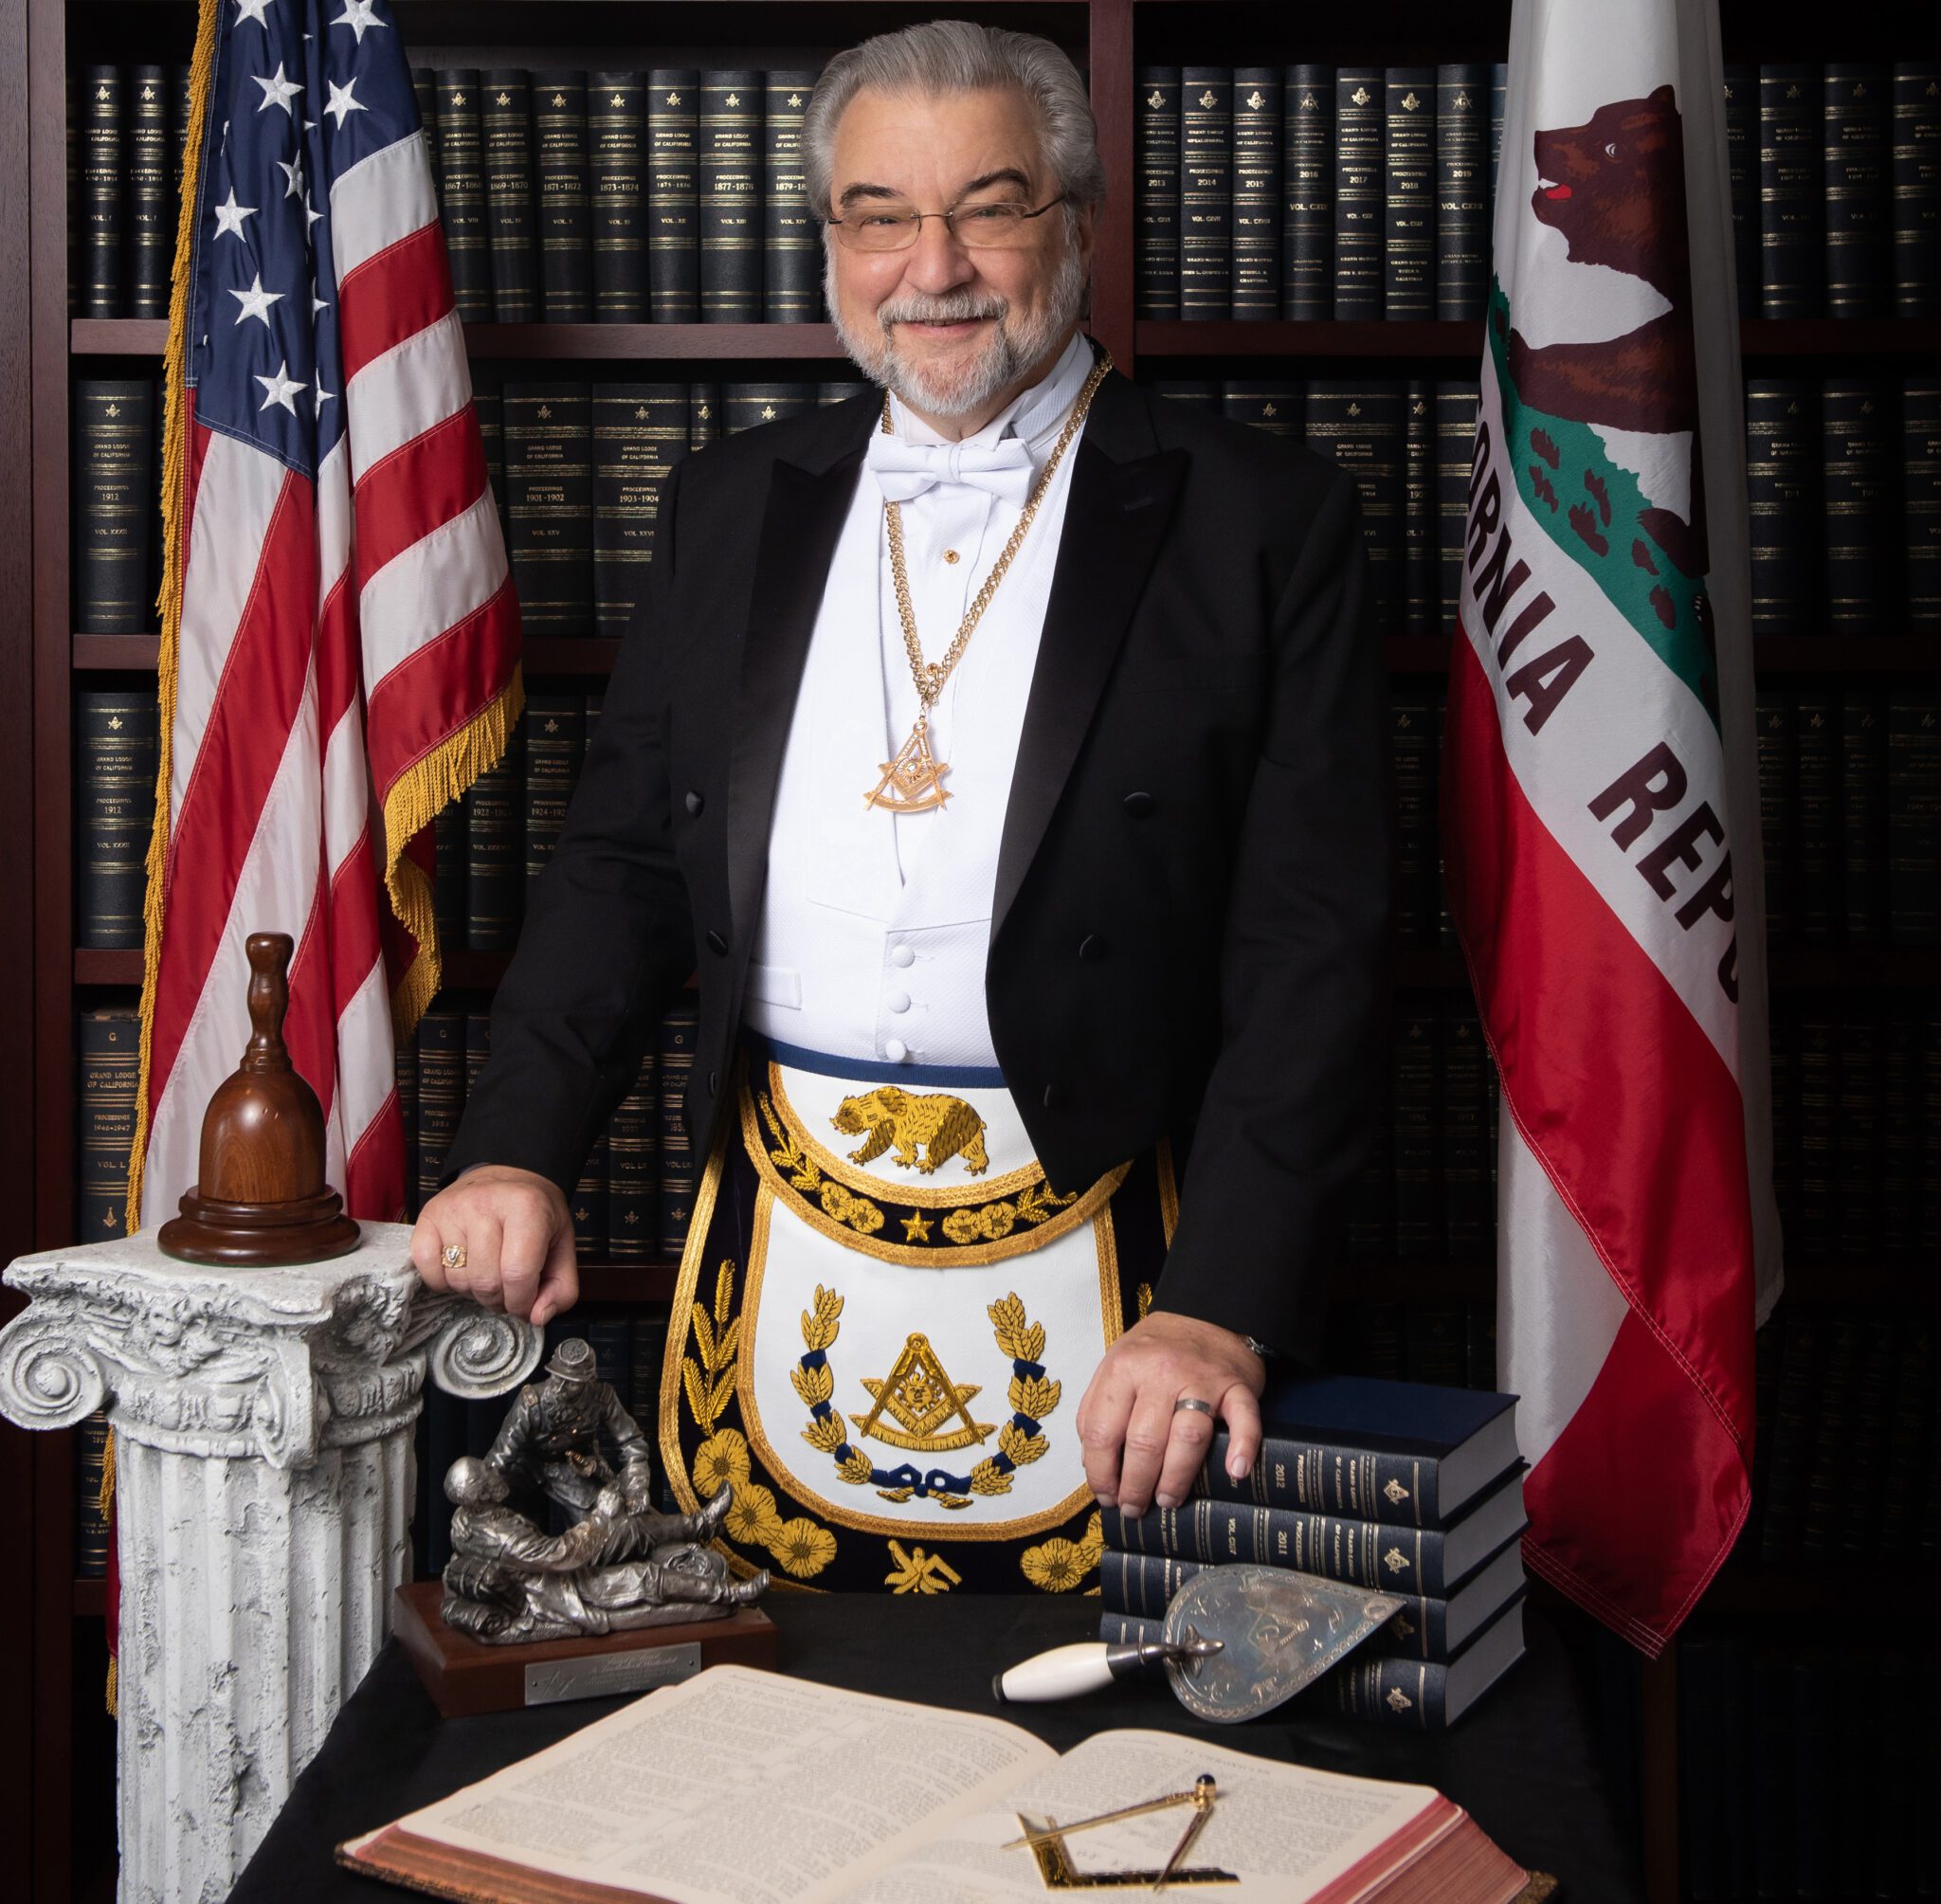 Grand Master of California Randy Brill poses in his Masonic uniform.